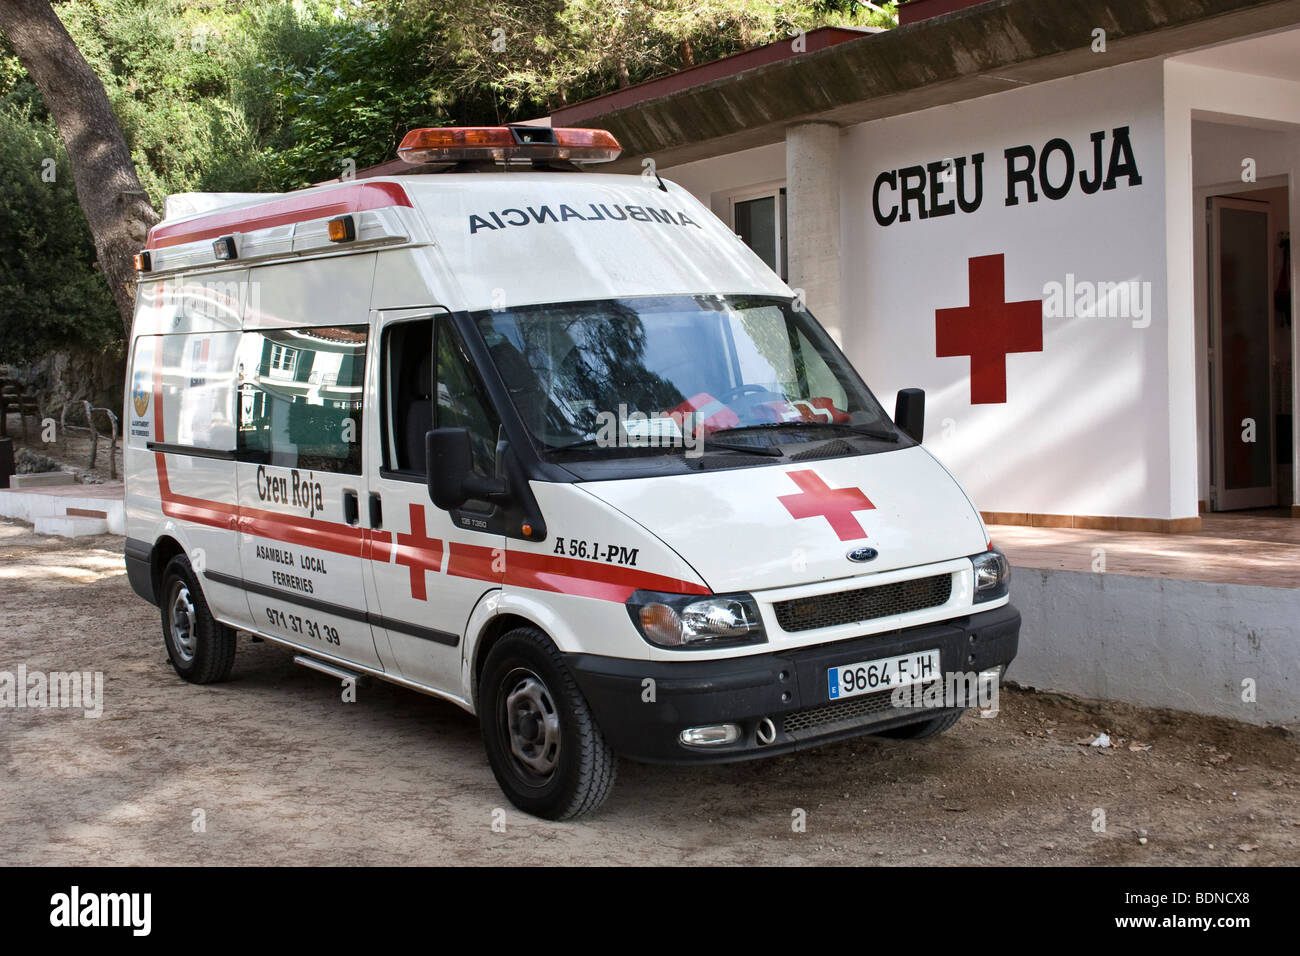 Creu Roja (Red Cross) ambulance and first aid post, Cala Santa Galdana, Menorca, Spain. Stock Photo